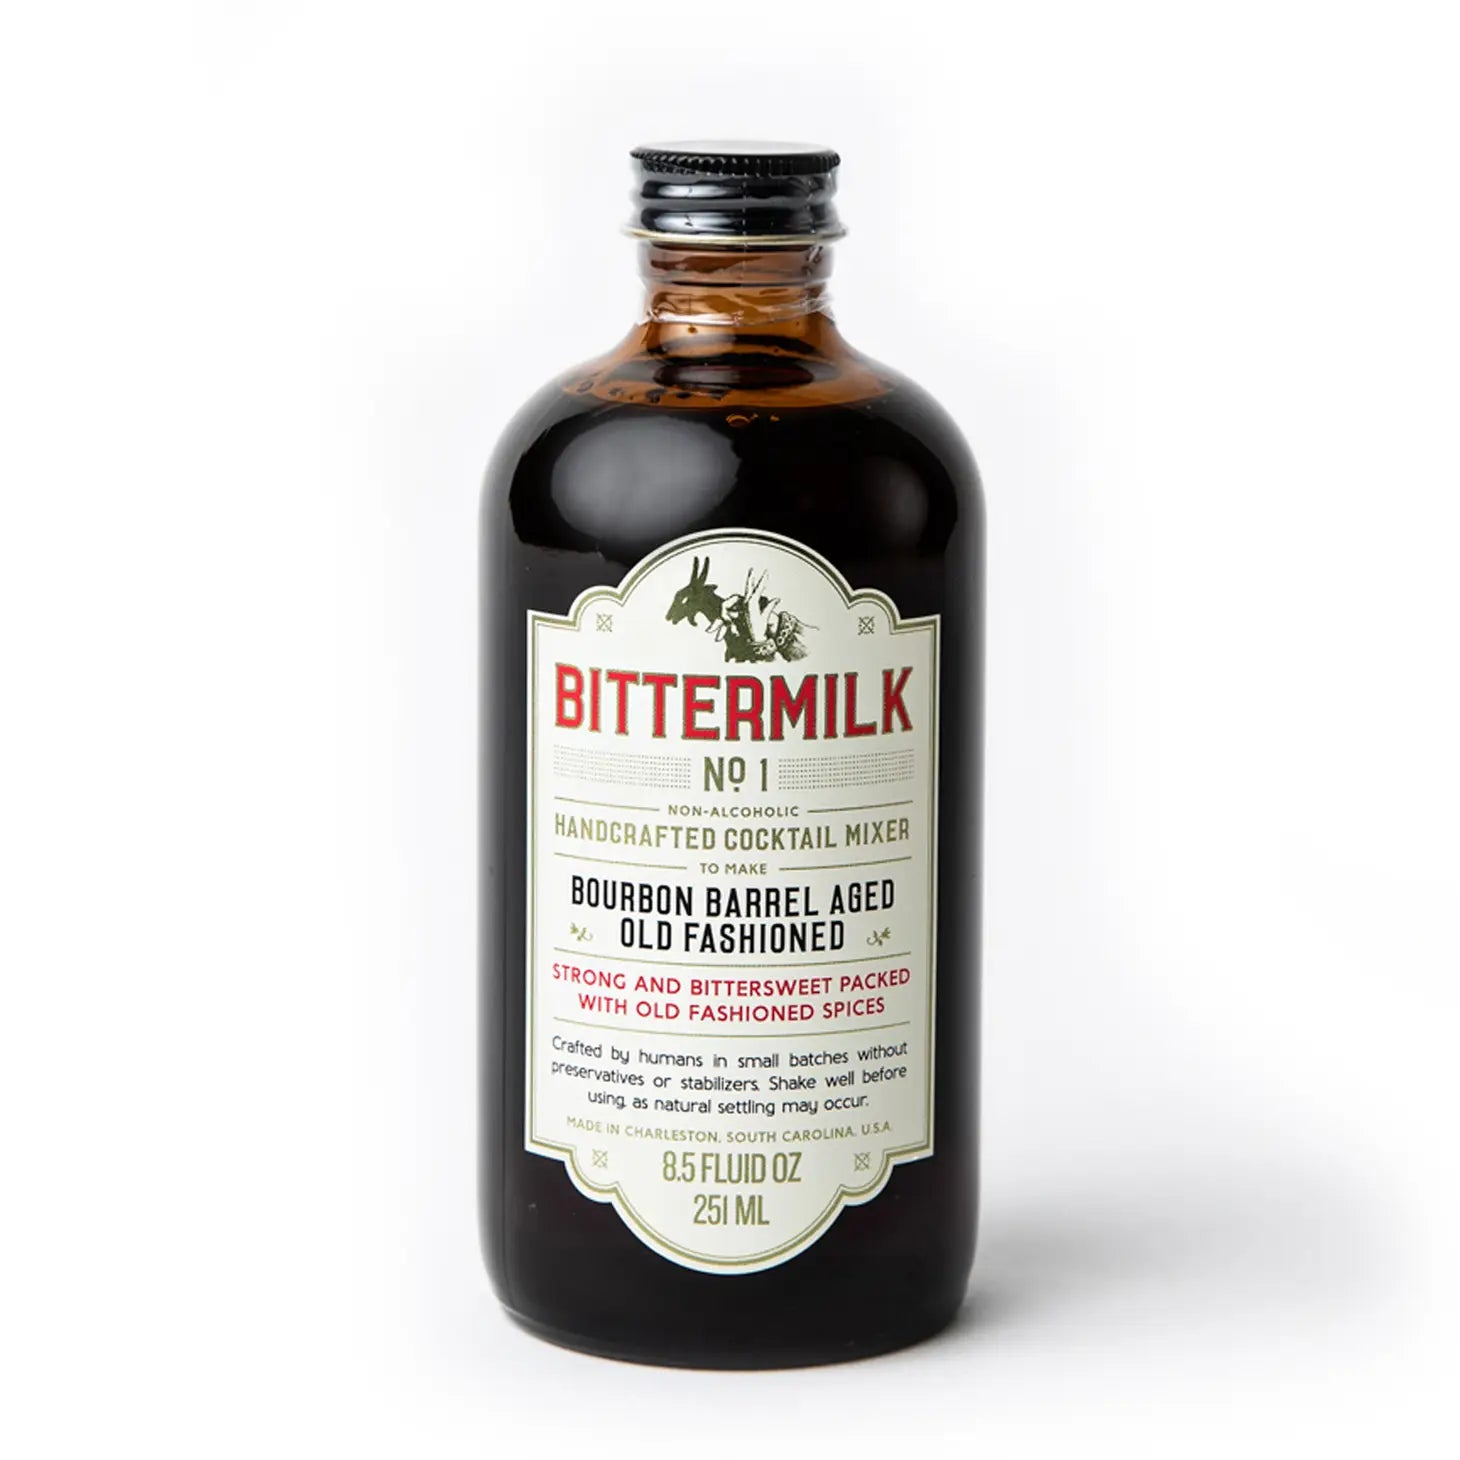 Bittermilk No. 1 Bourbon Barrel Aged Old Fashioned